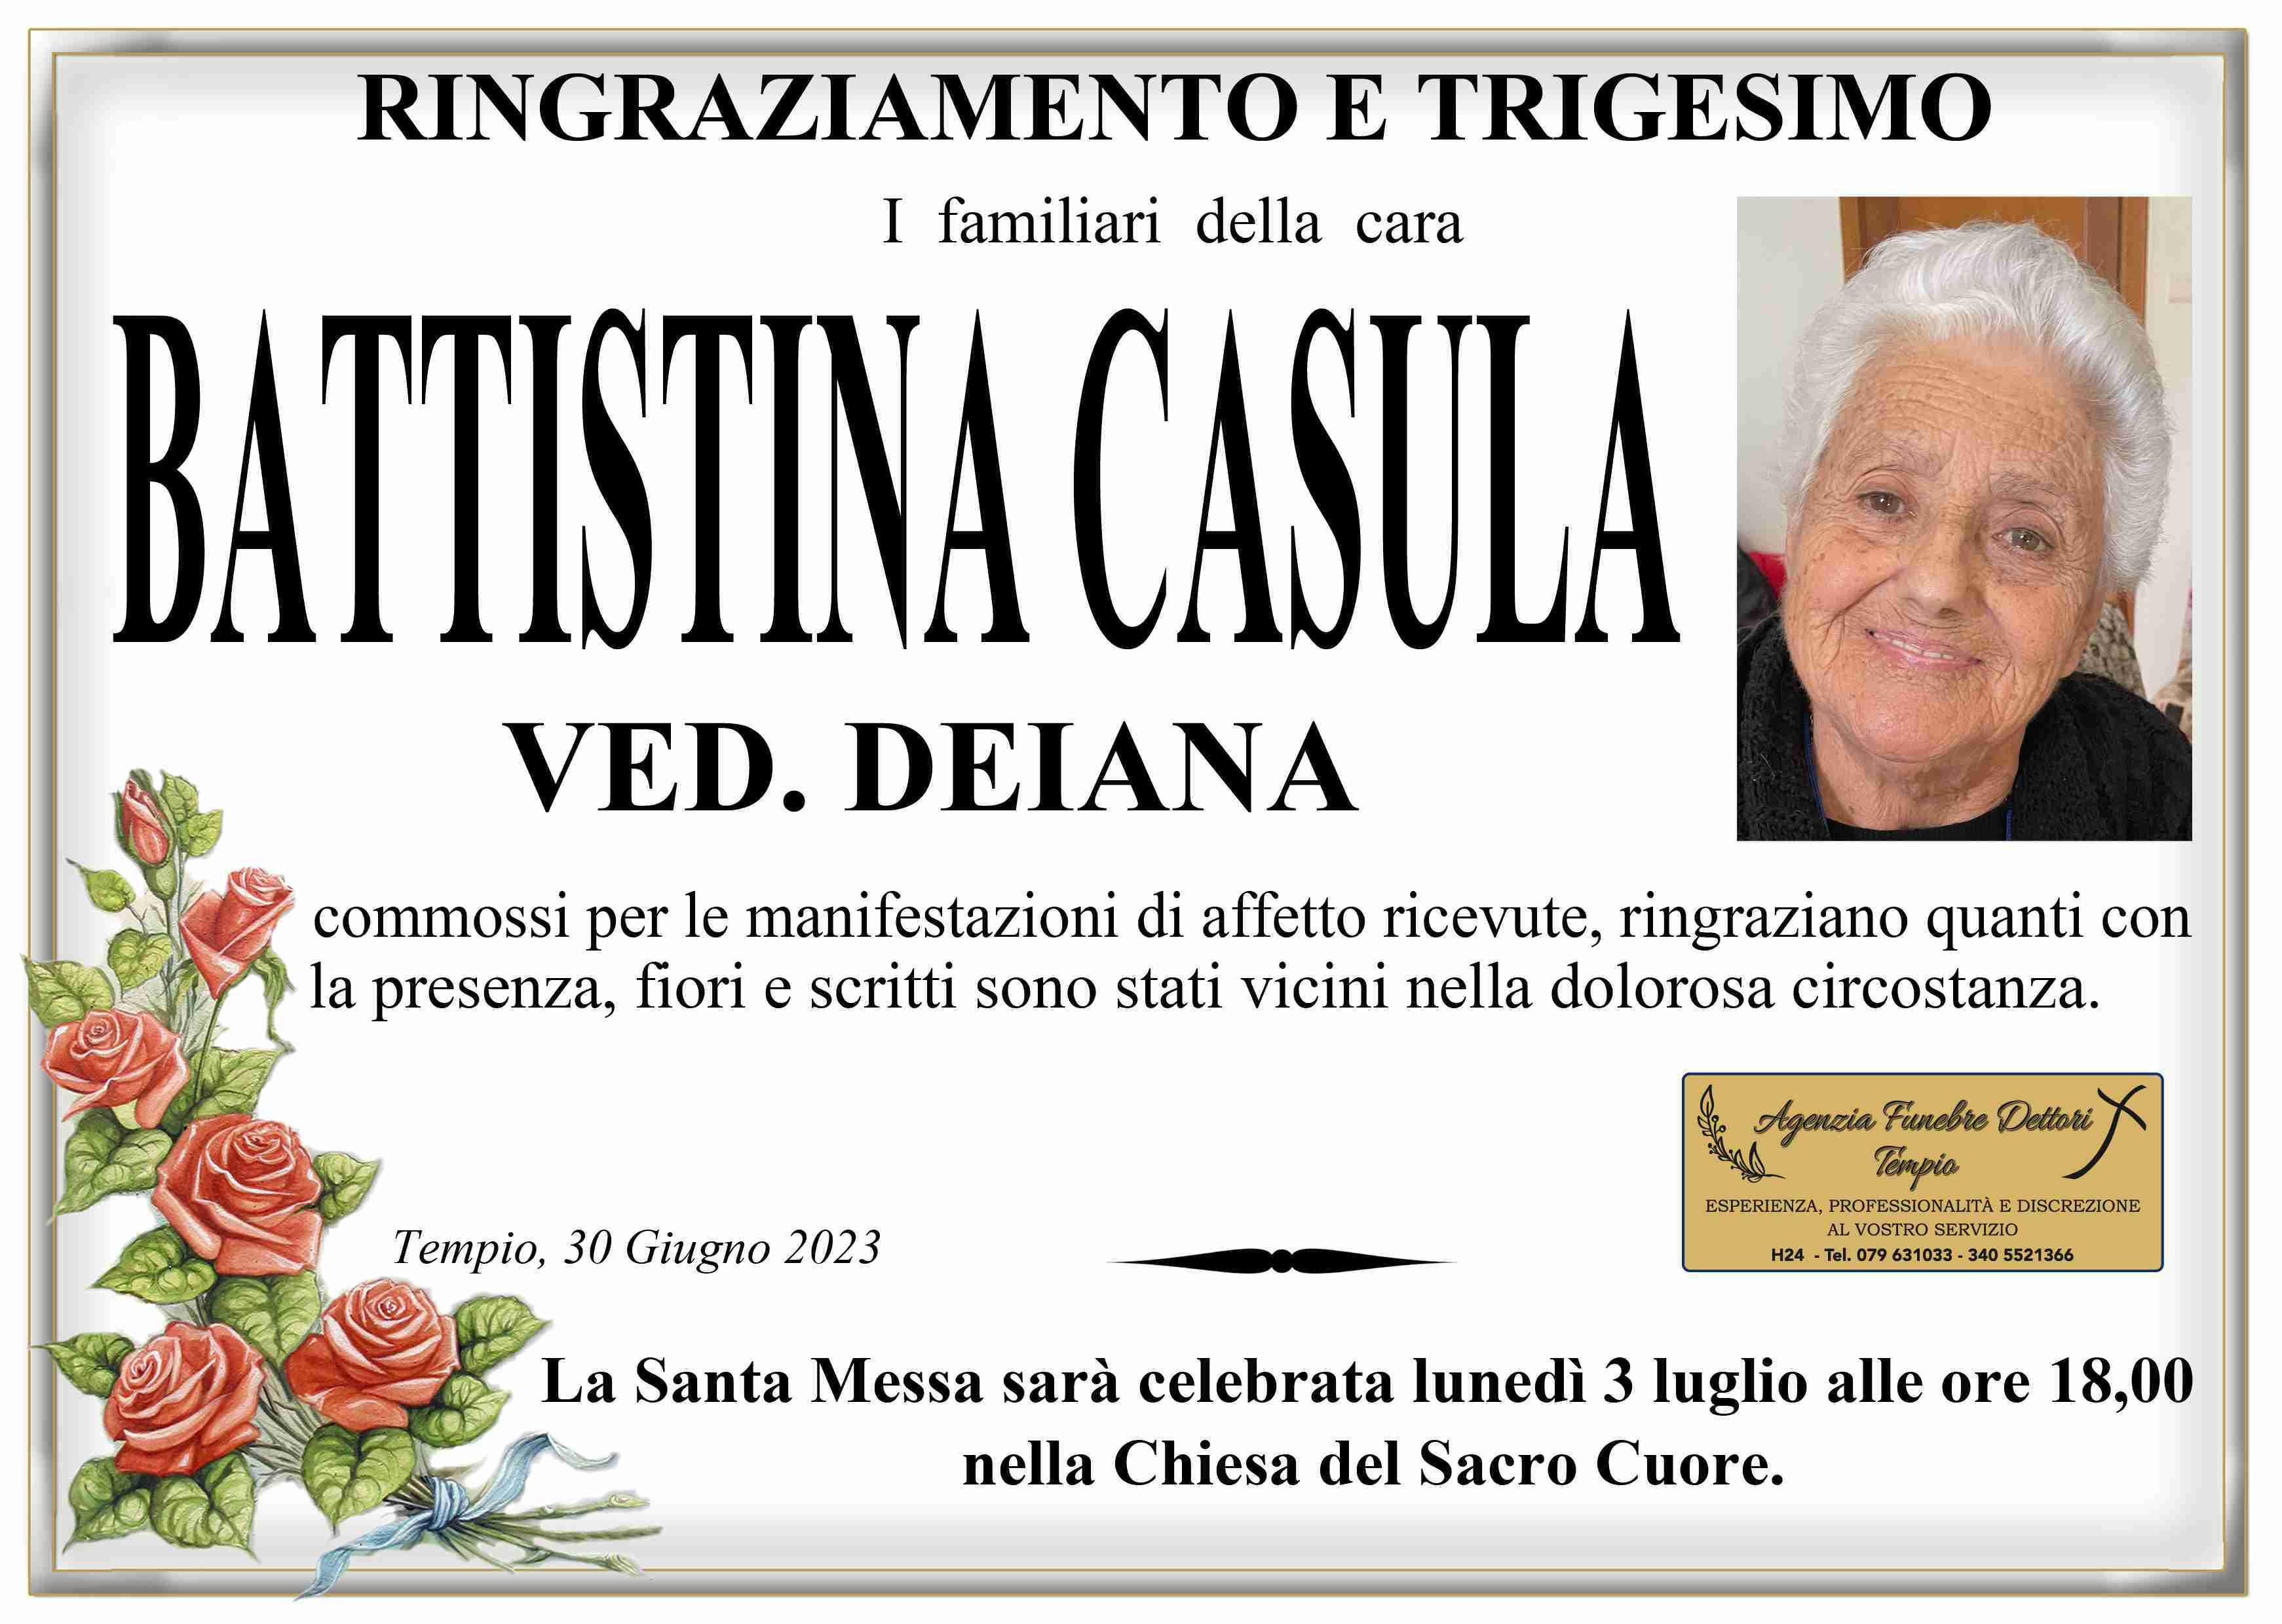 Battistina Casula